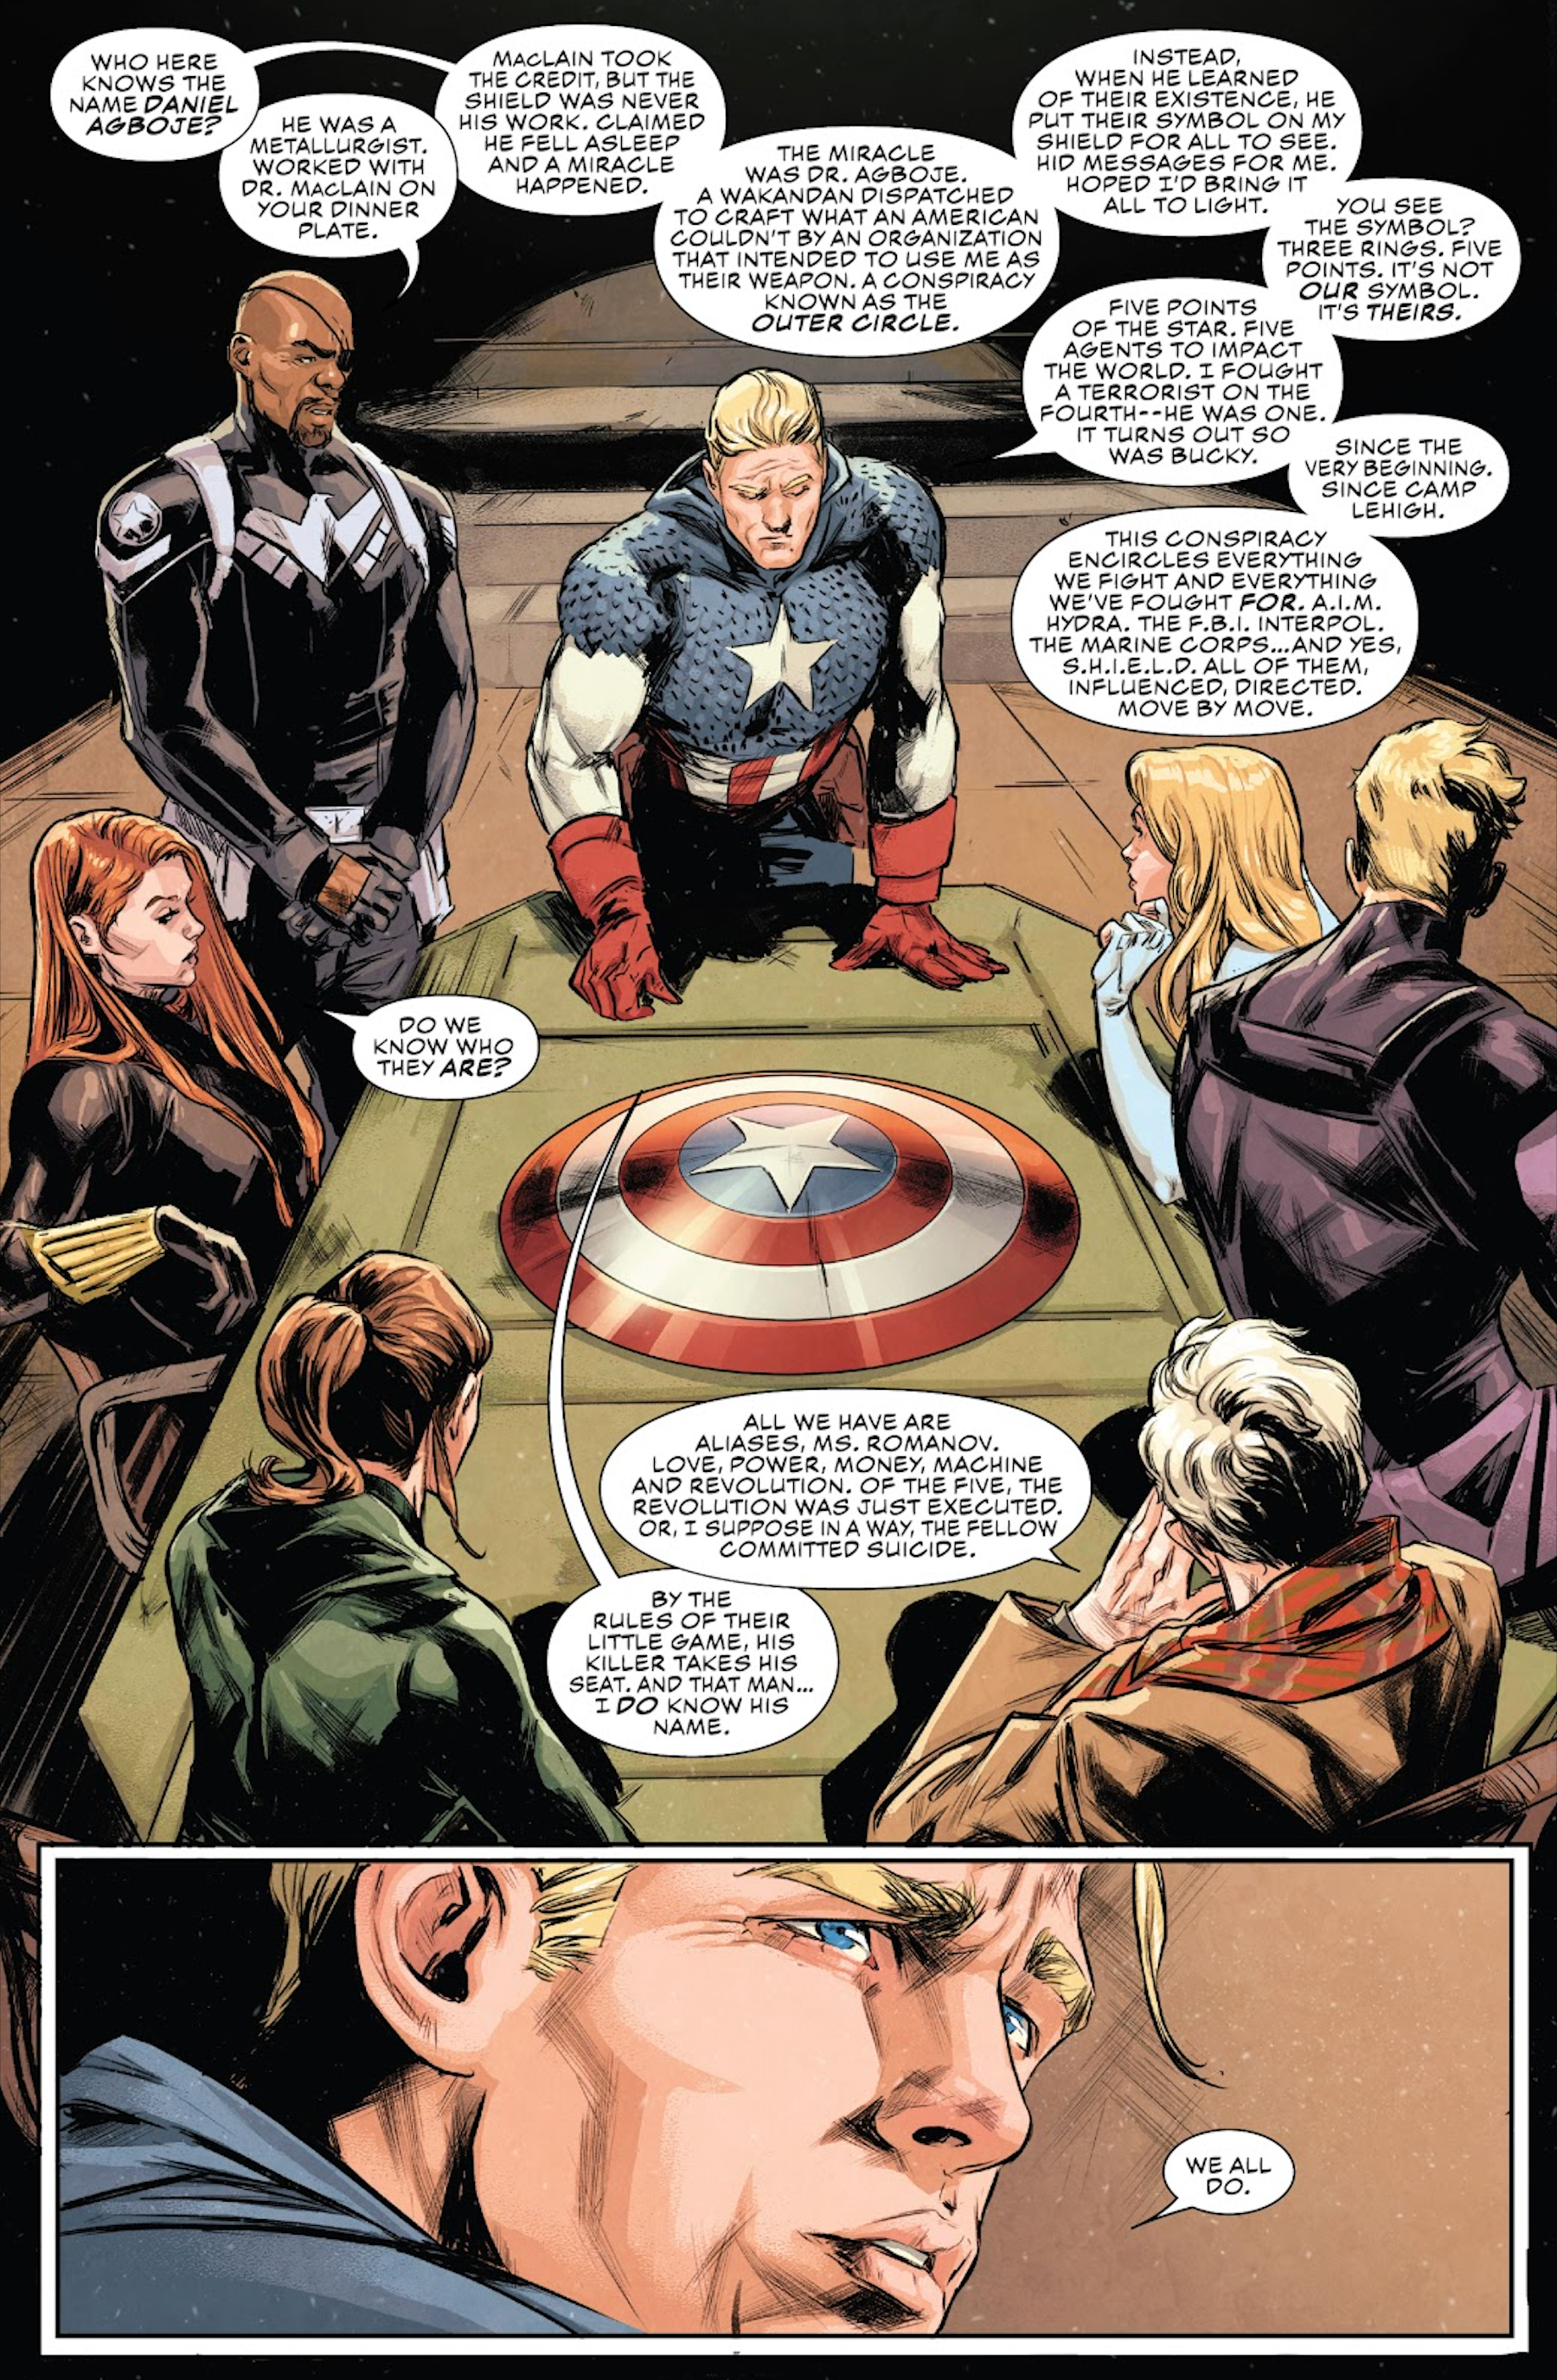 Captain America reveals his shield's origin